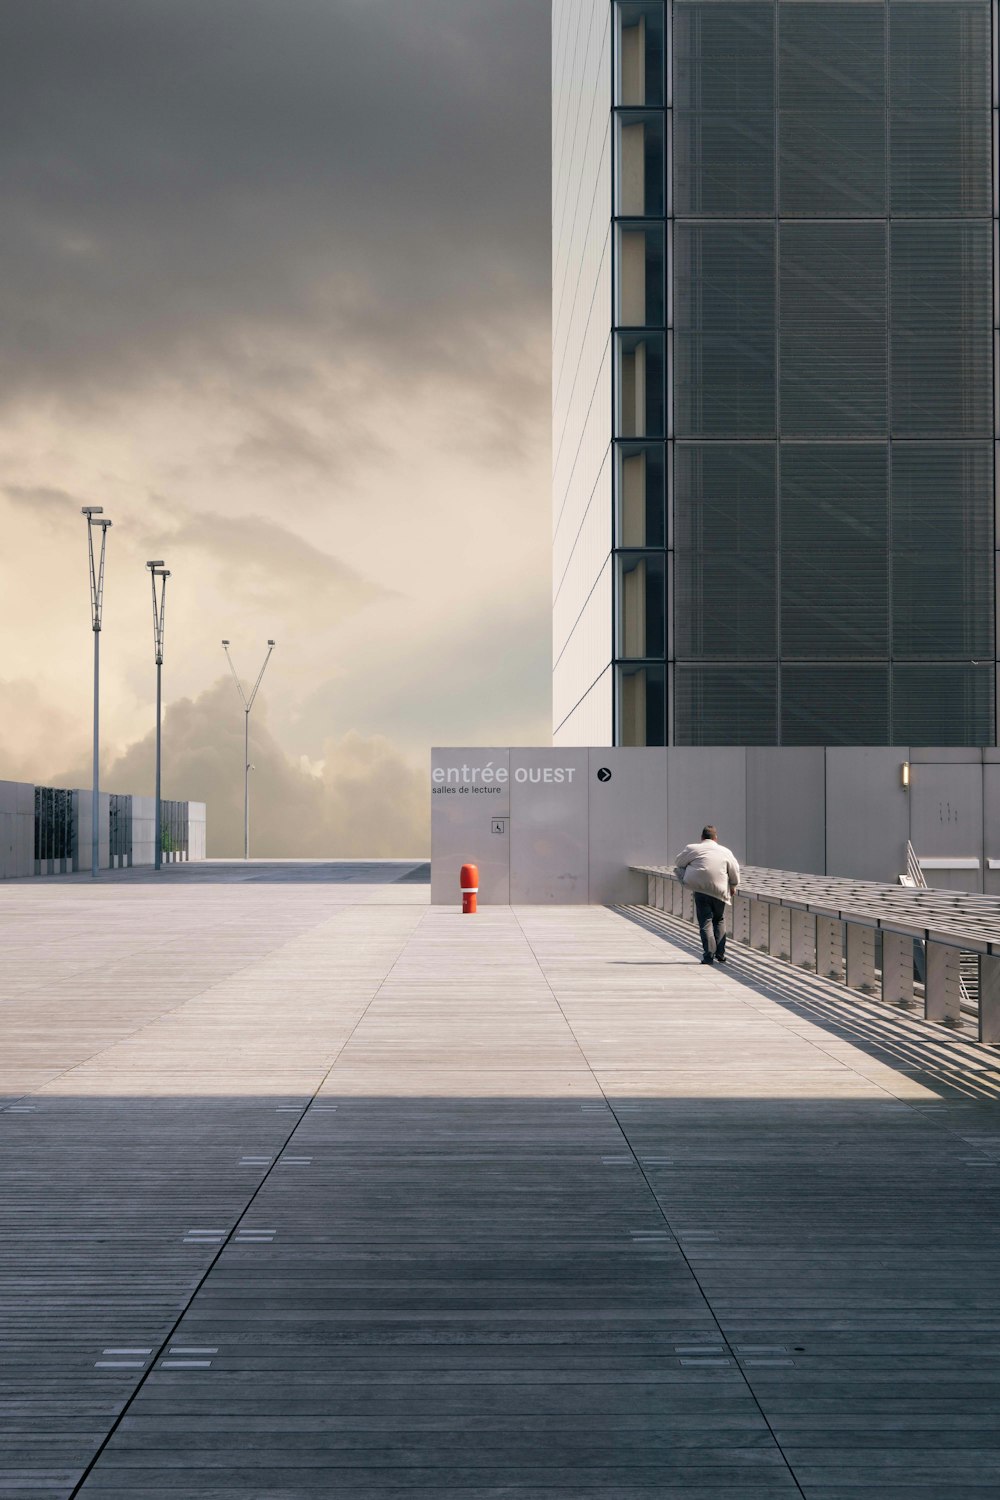 man walking on concrete pavement near building during daytime